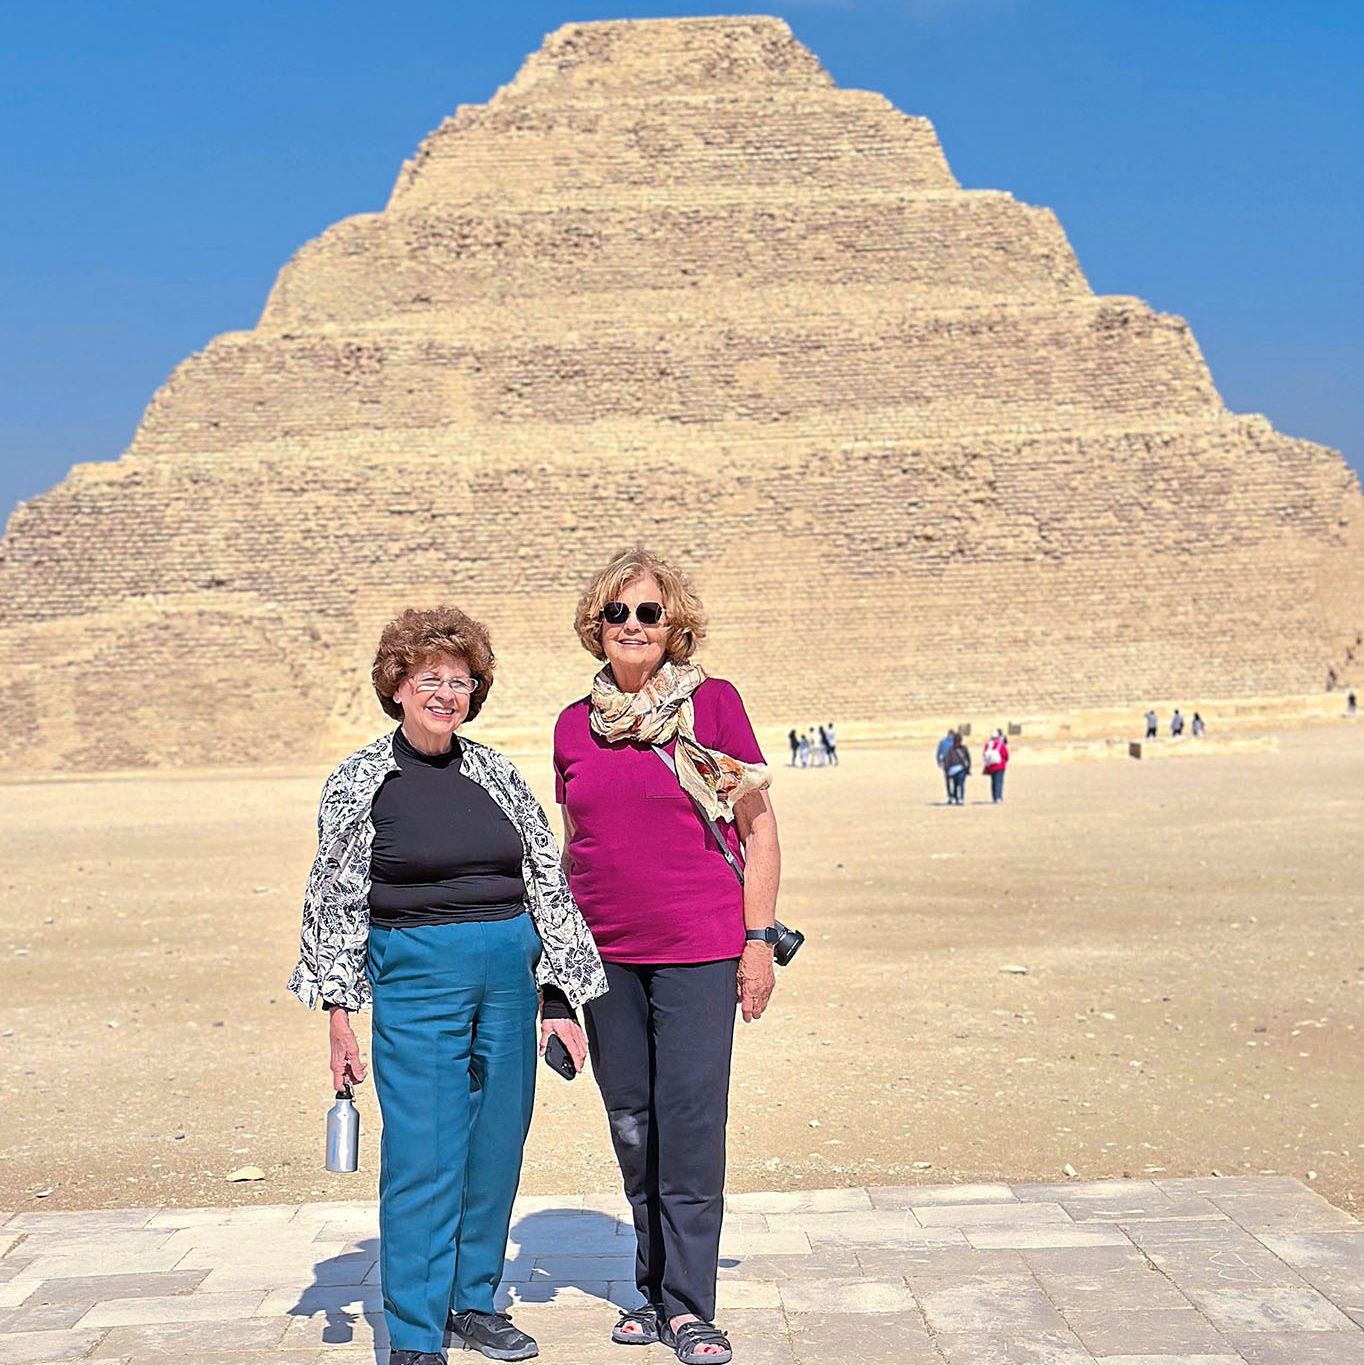 Senior travel buddies in Egypt.